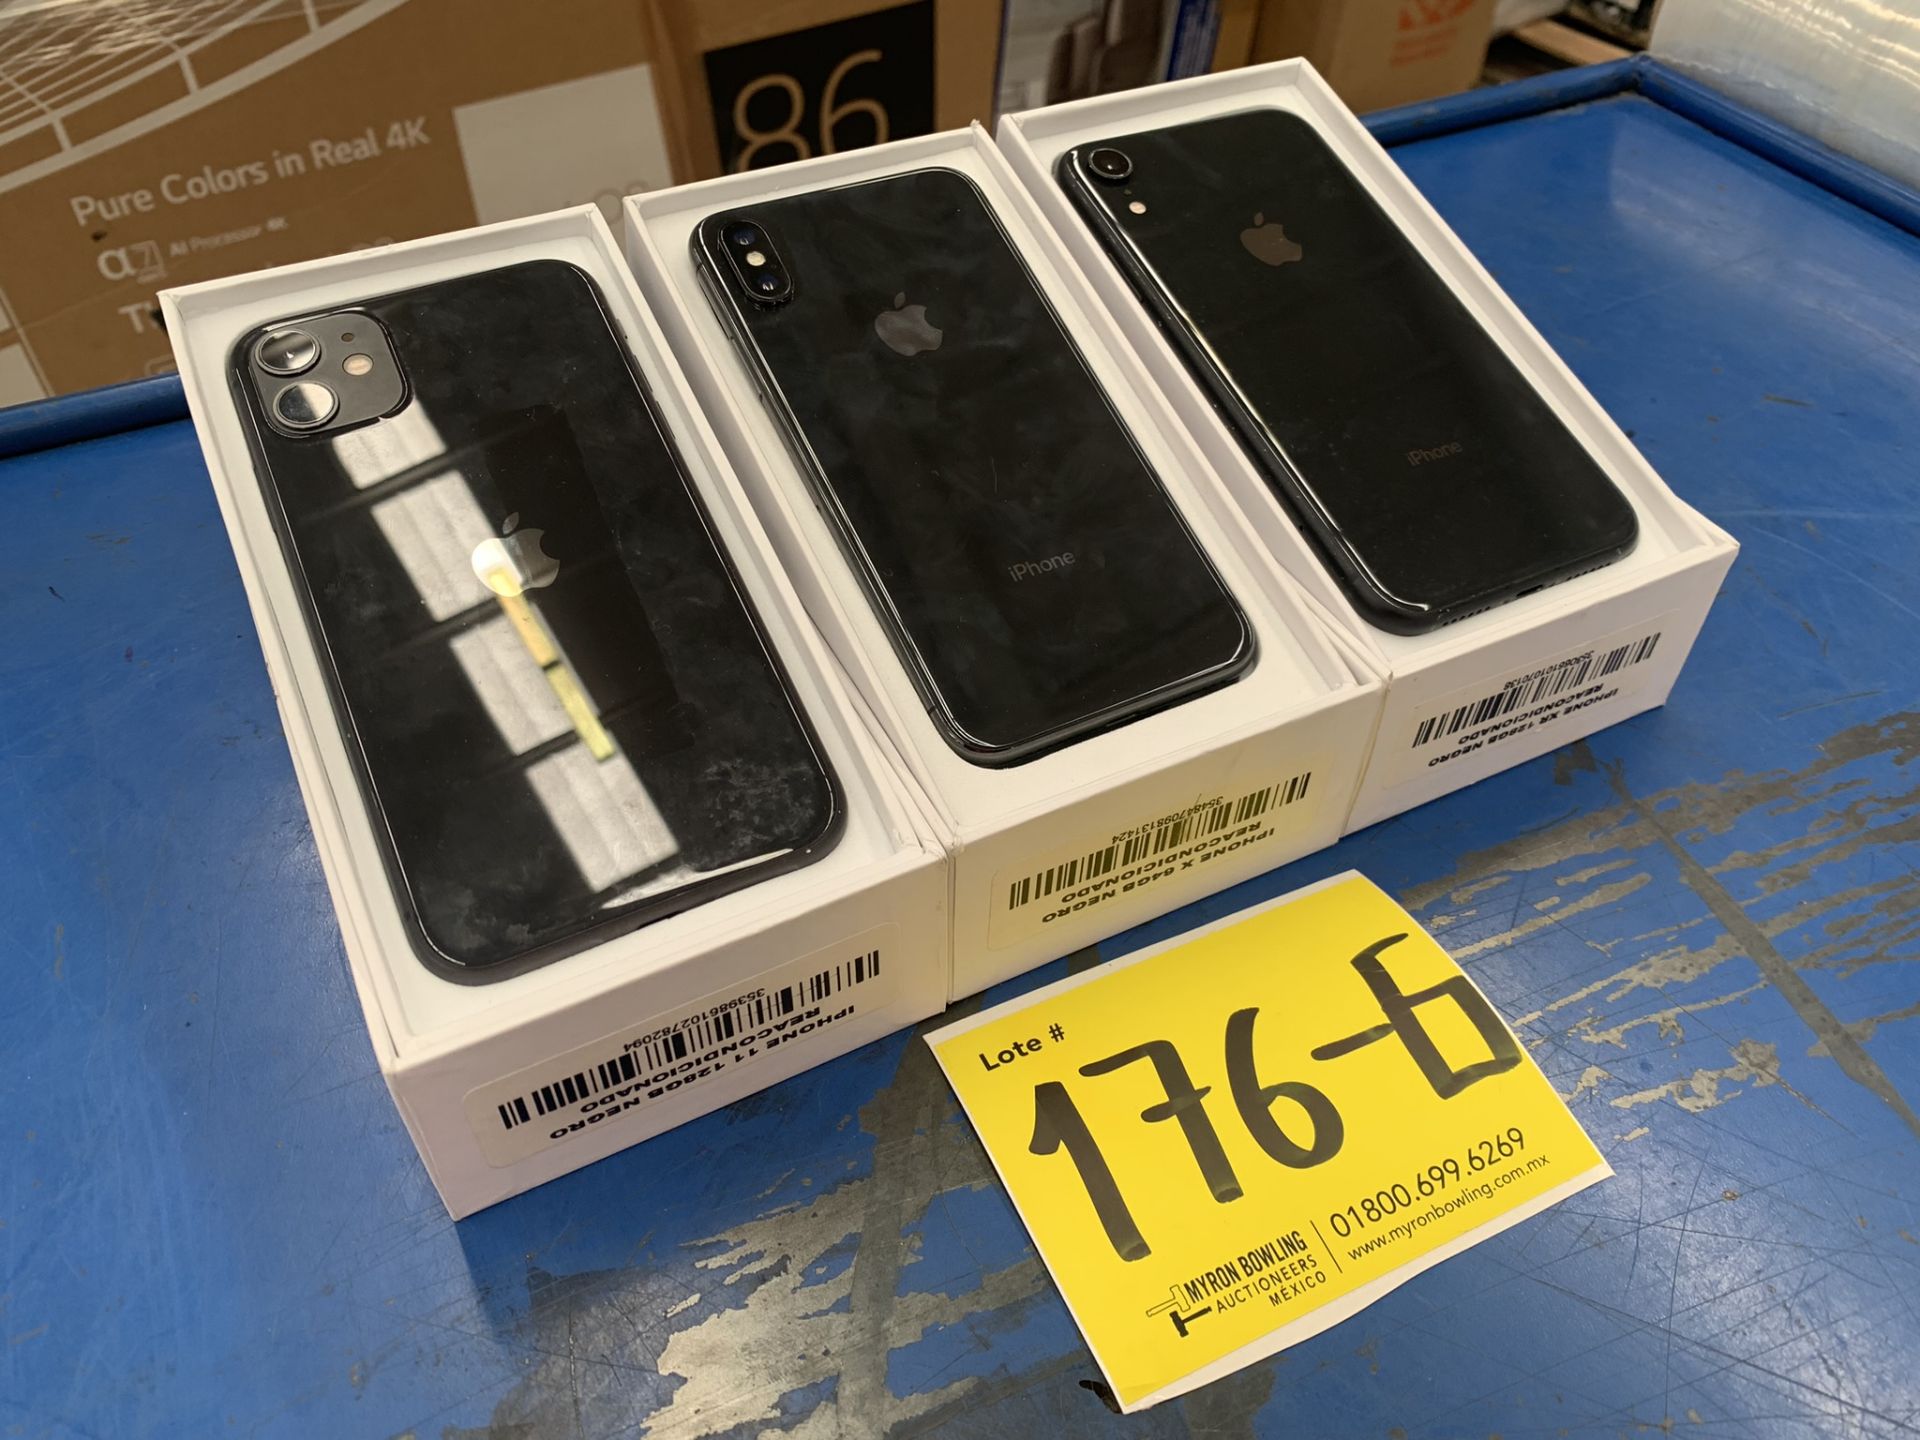 Lote De 3 Teléfonos Celular Contiene: 1 Iphone Marca Apple, Modelo 11, Color Negro, 128 GB De A - Image 5 of 8